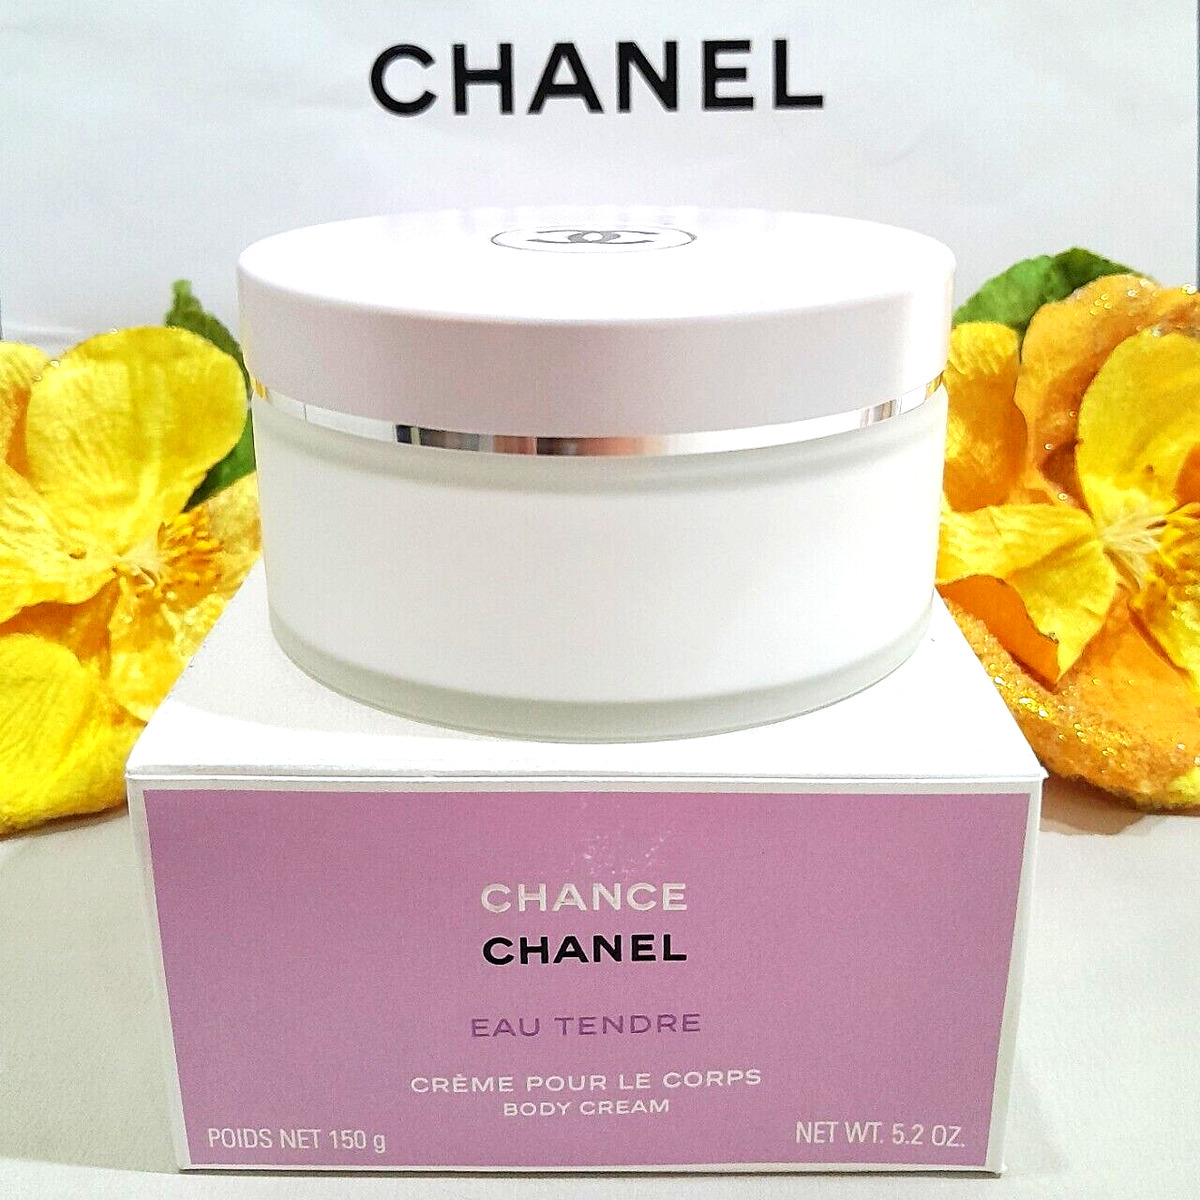 CHANEL (CHANCE) Body Cream (150g)